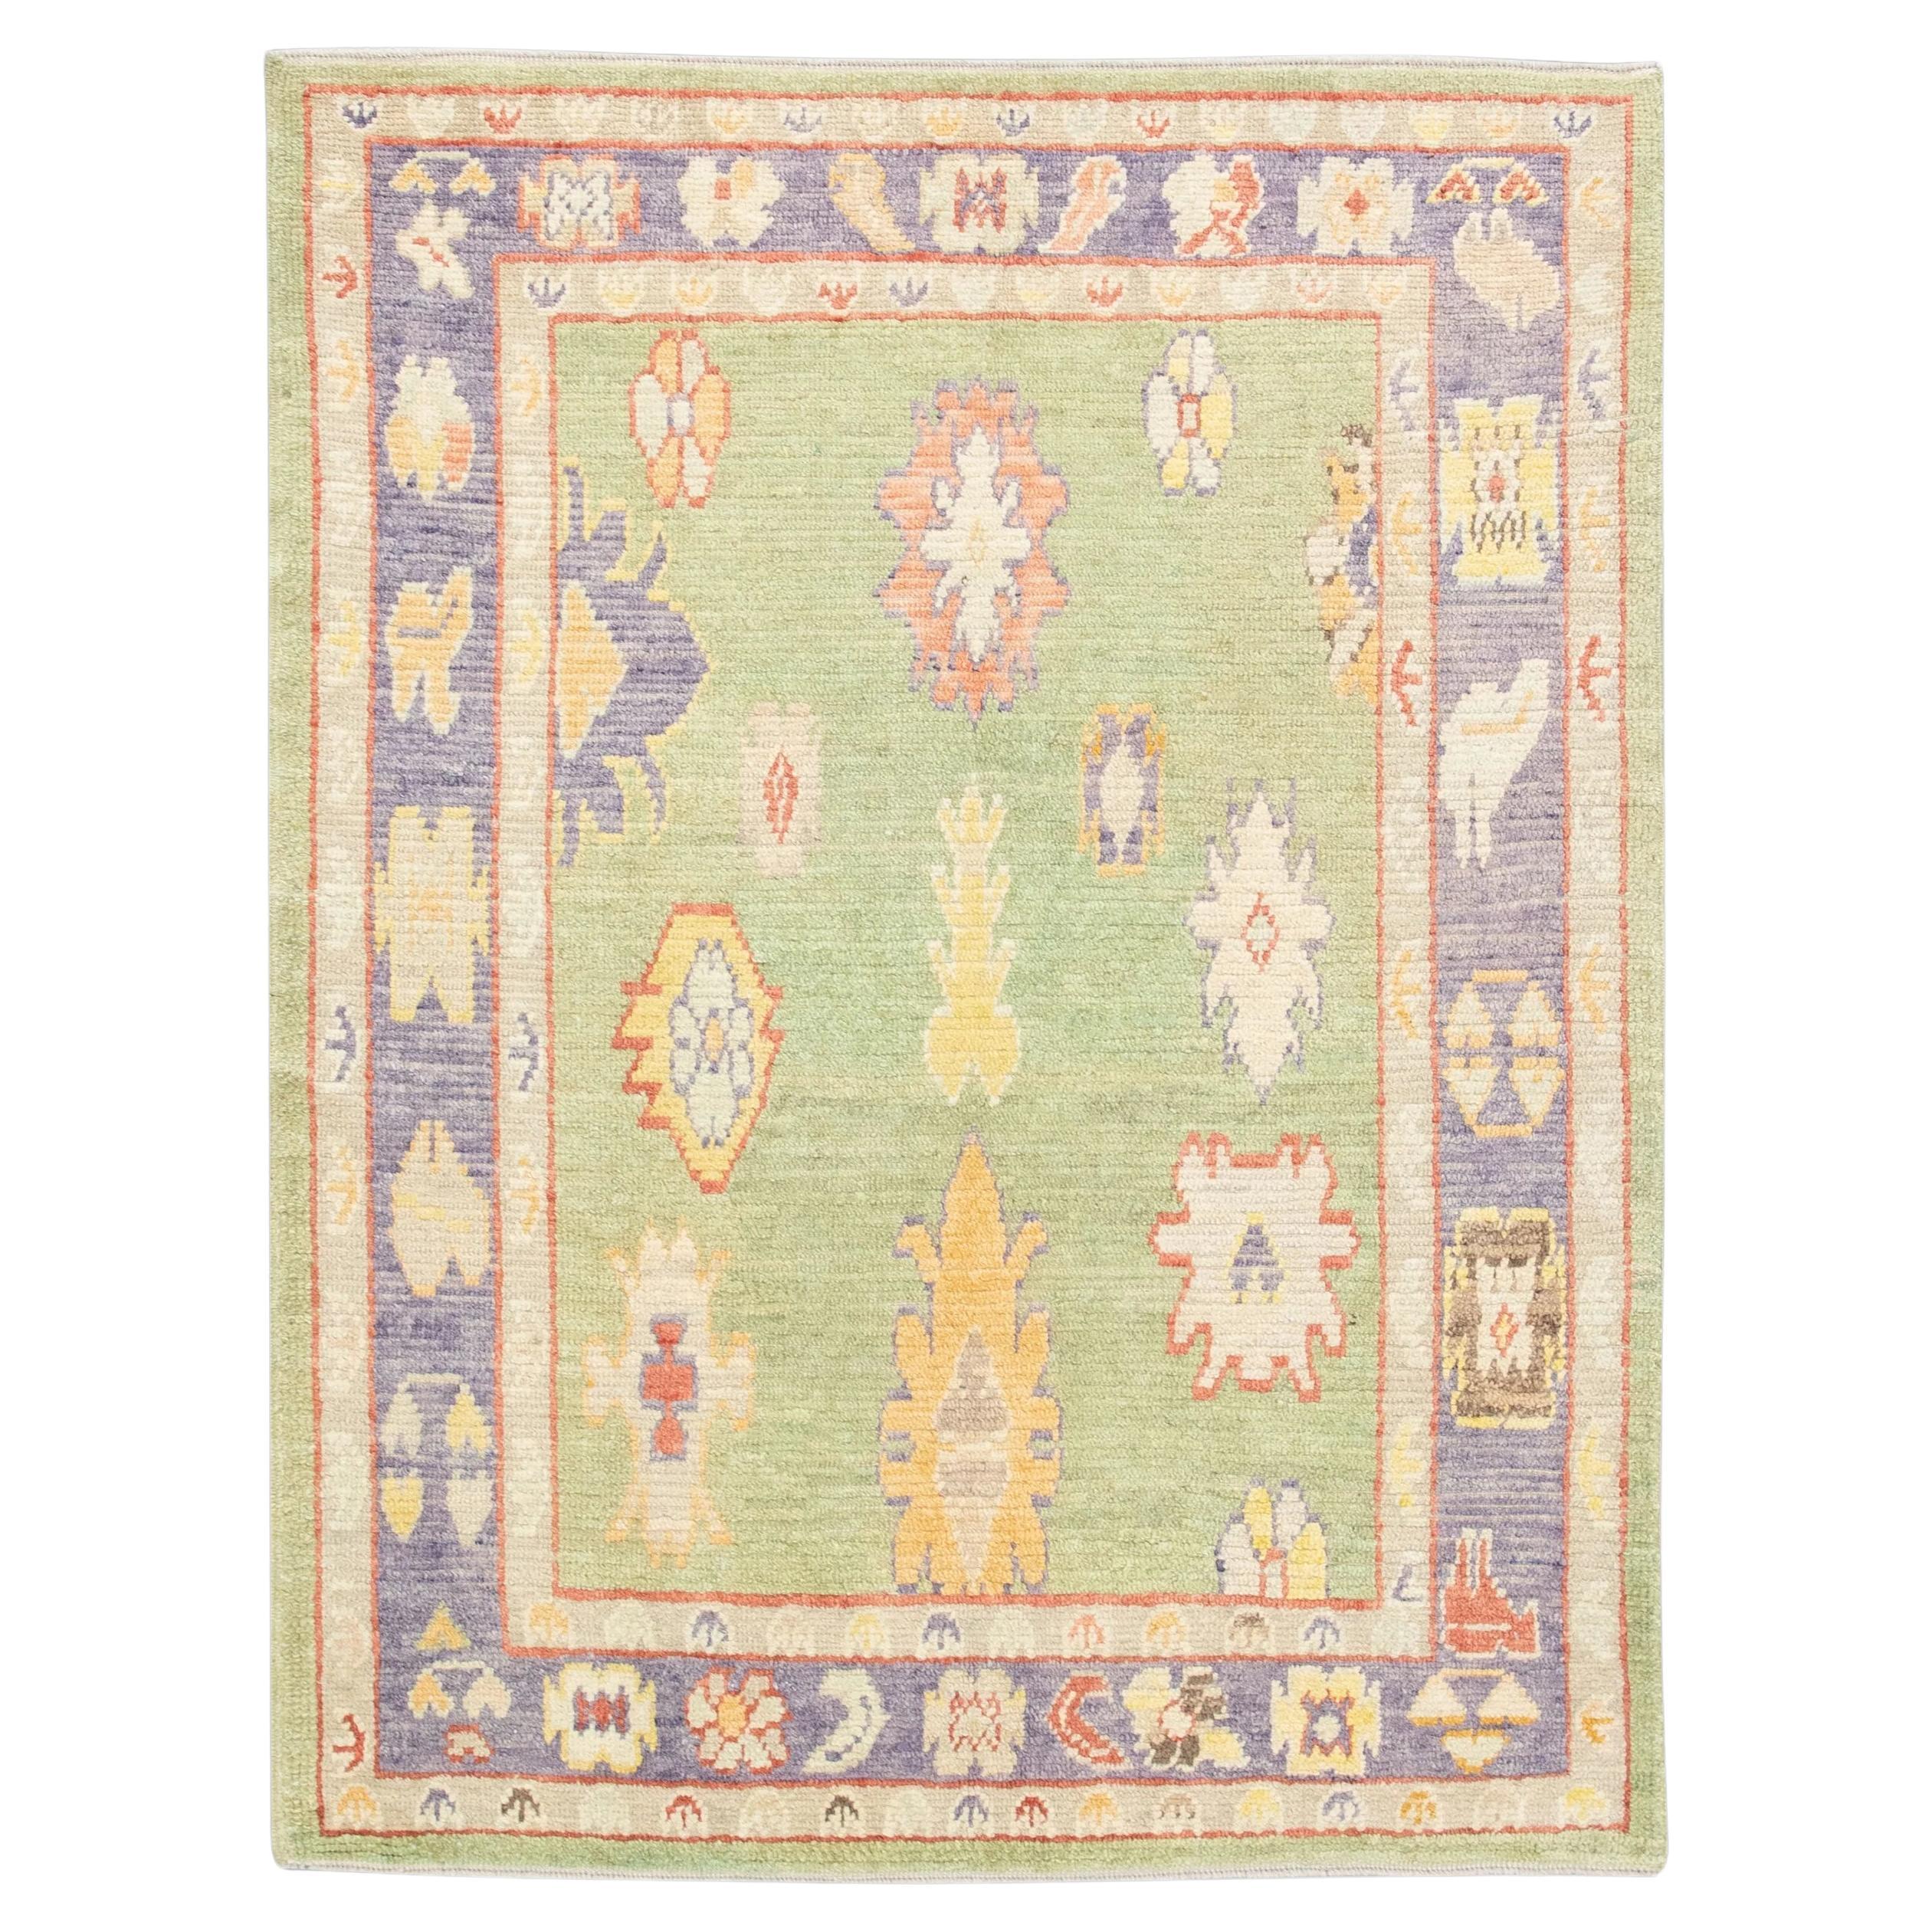 Handwoven Wool Carpet Turkish Oushak Rug 5'6" x 7'7" #4590 For Sale